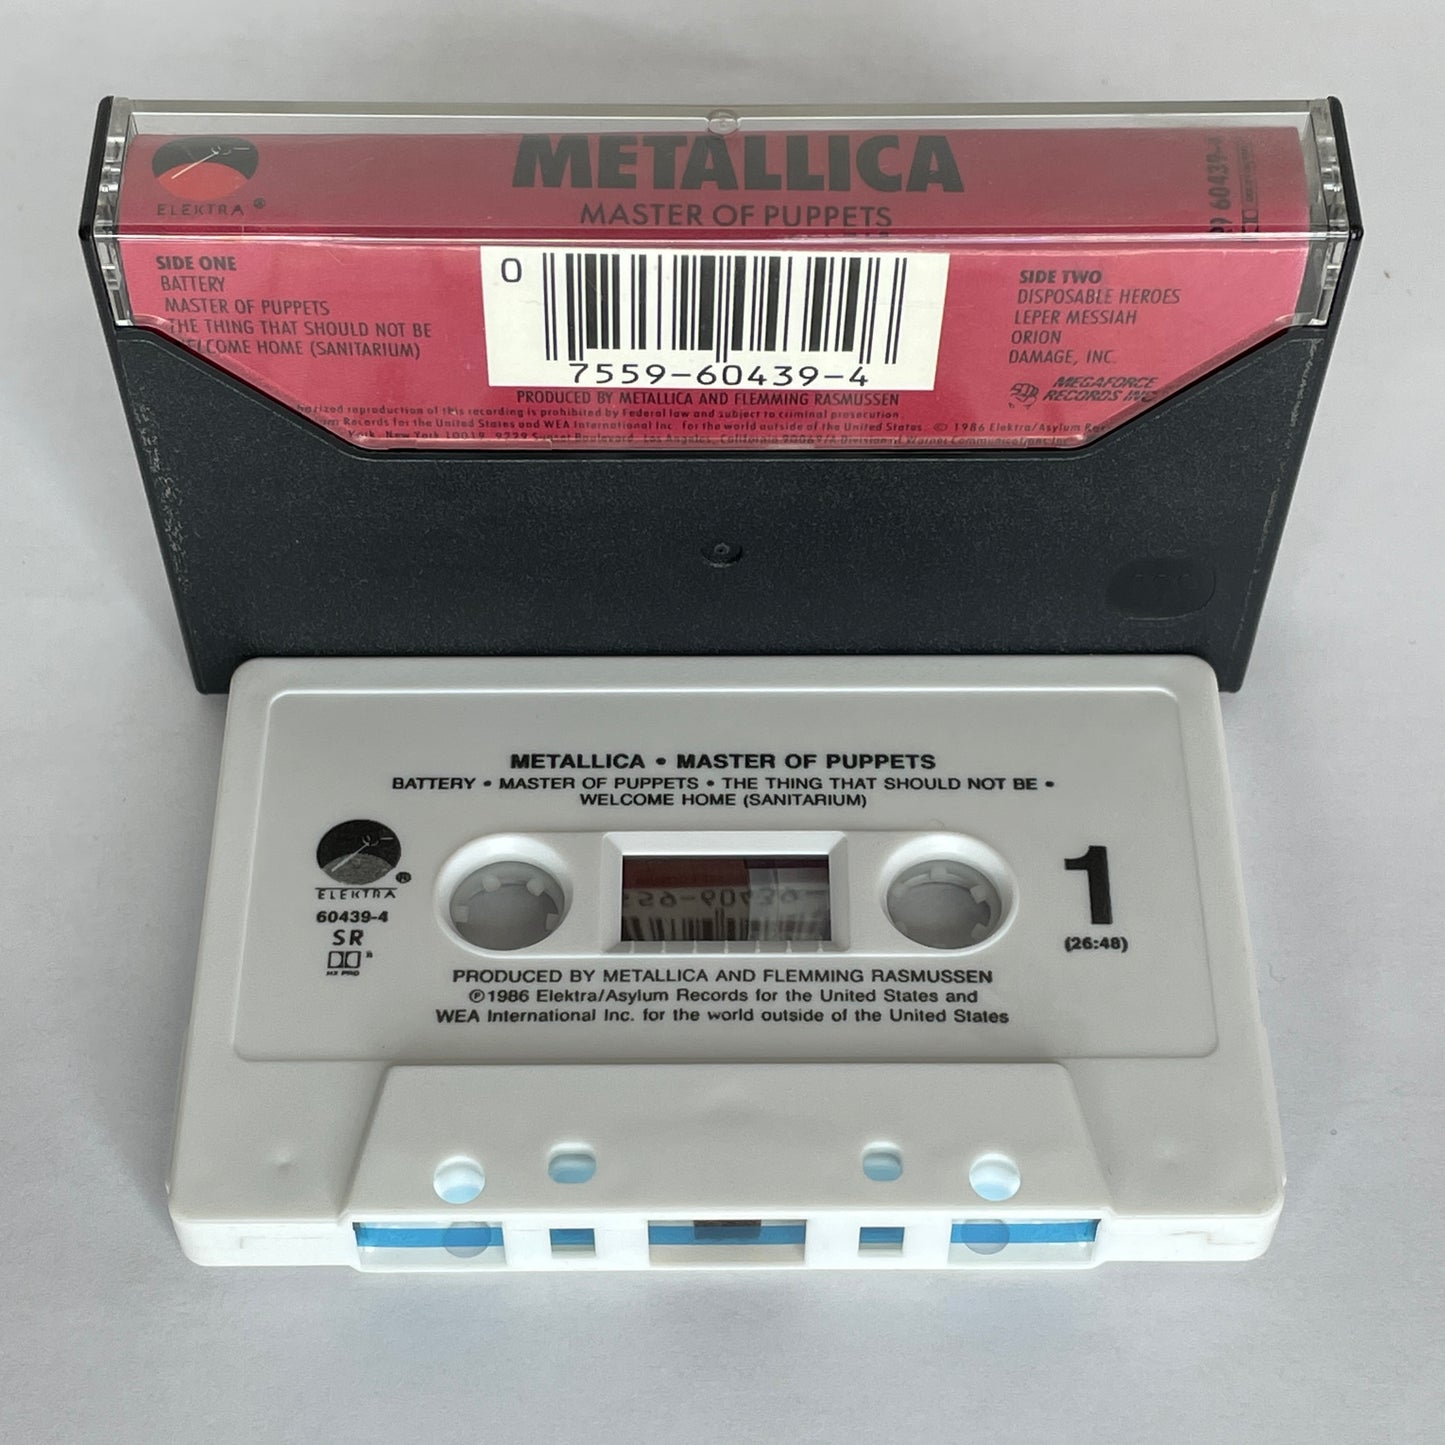 Metallica - Master of Puppets original cassette tape